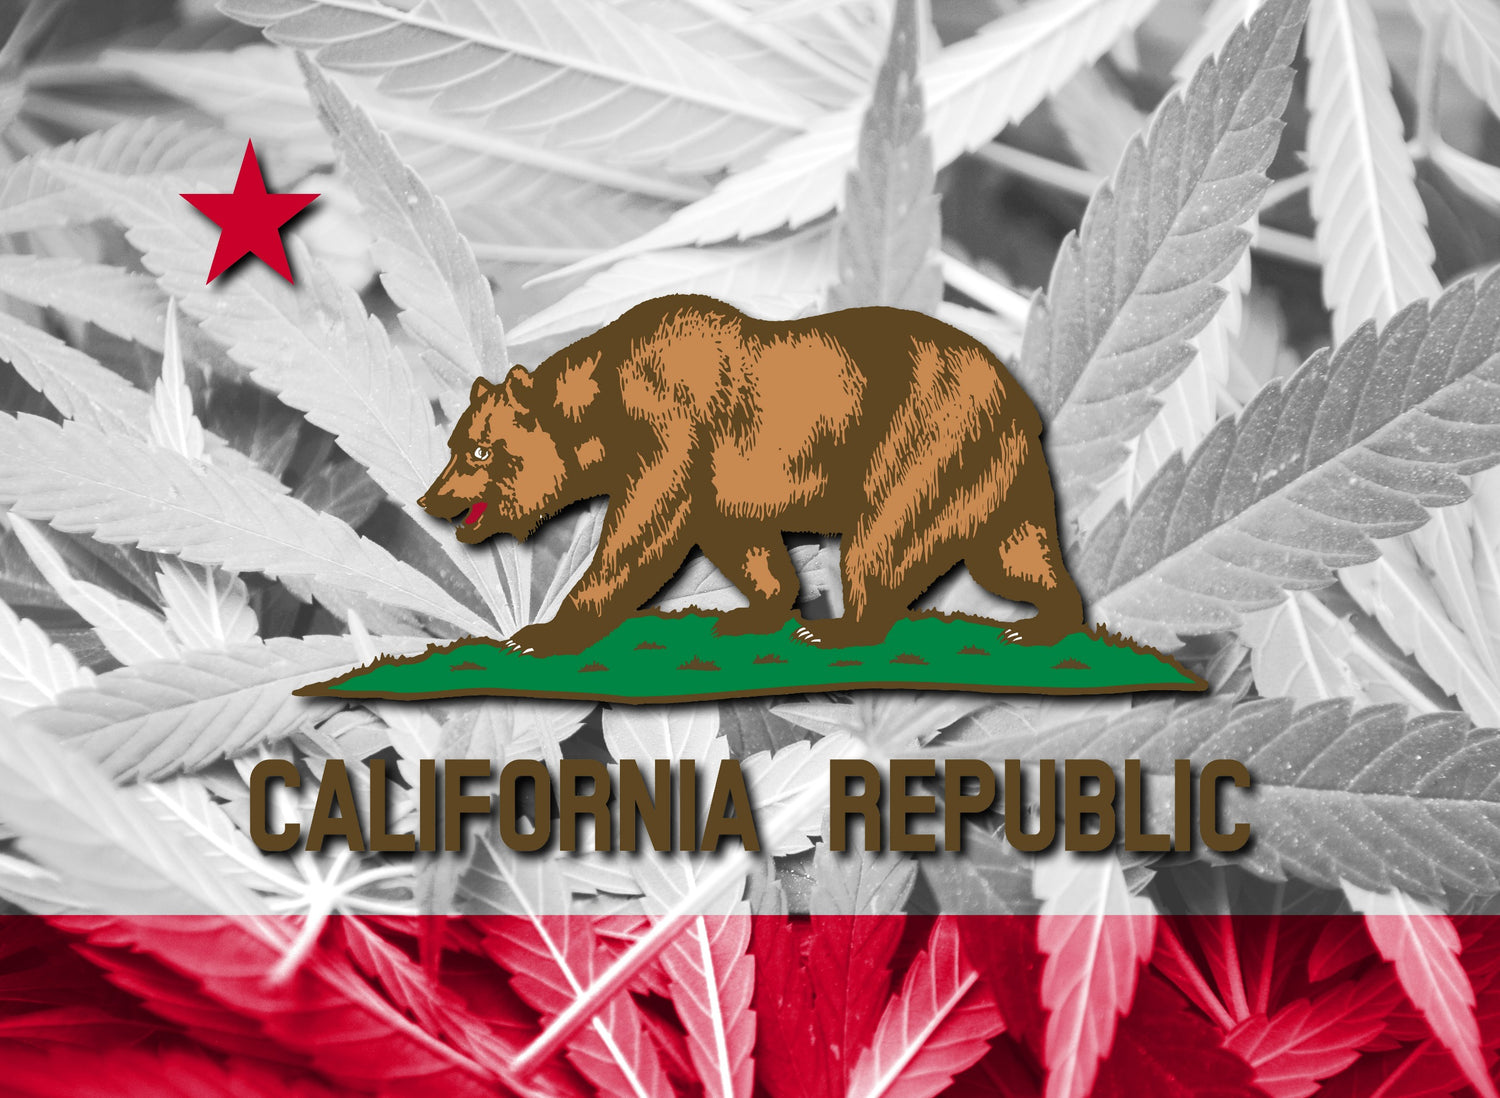 California Legislature Advances Key Cannabis Bills To The Governor